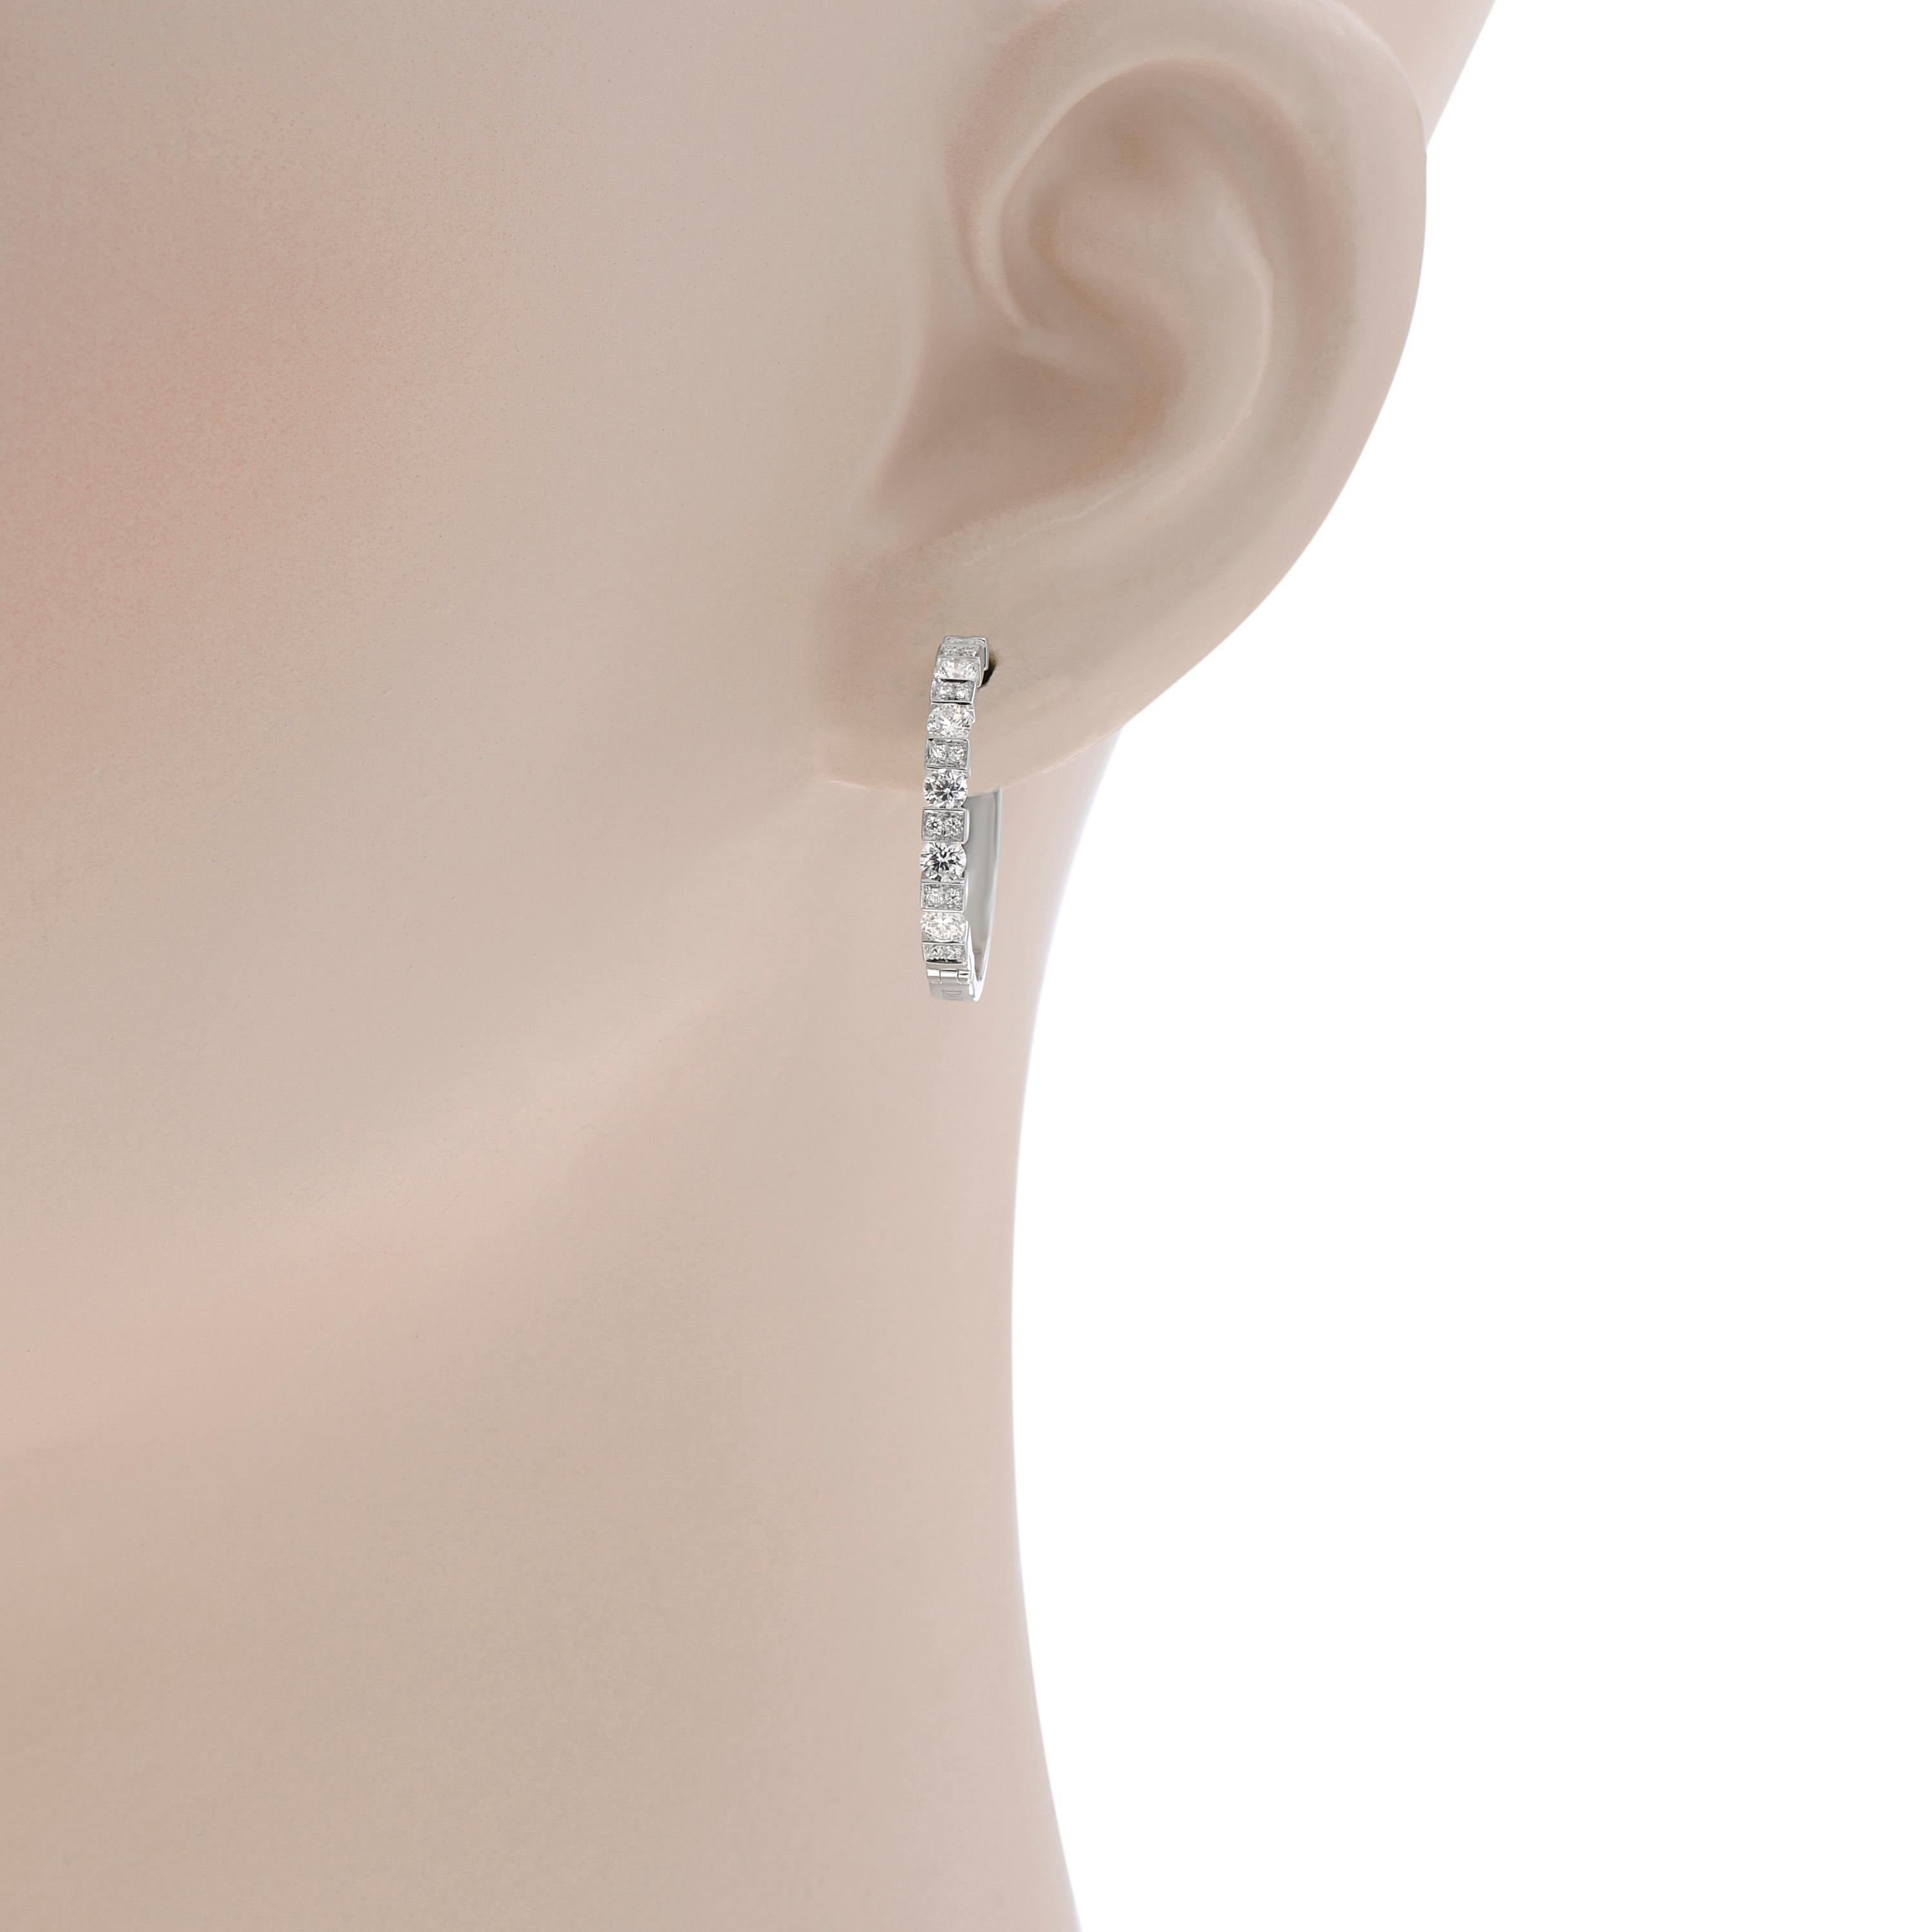 Damiani 18K White Gold Huggie Earrings feature 1.012ct. tw. diamonds set in 18K White Gold. The earring diameter is 3/4